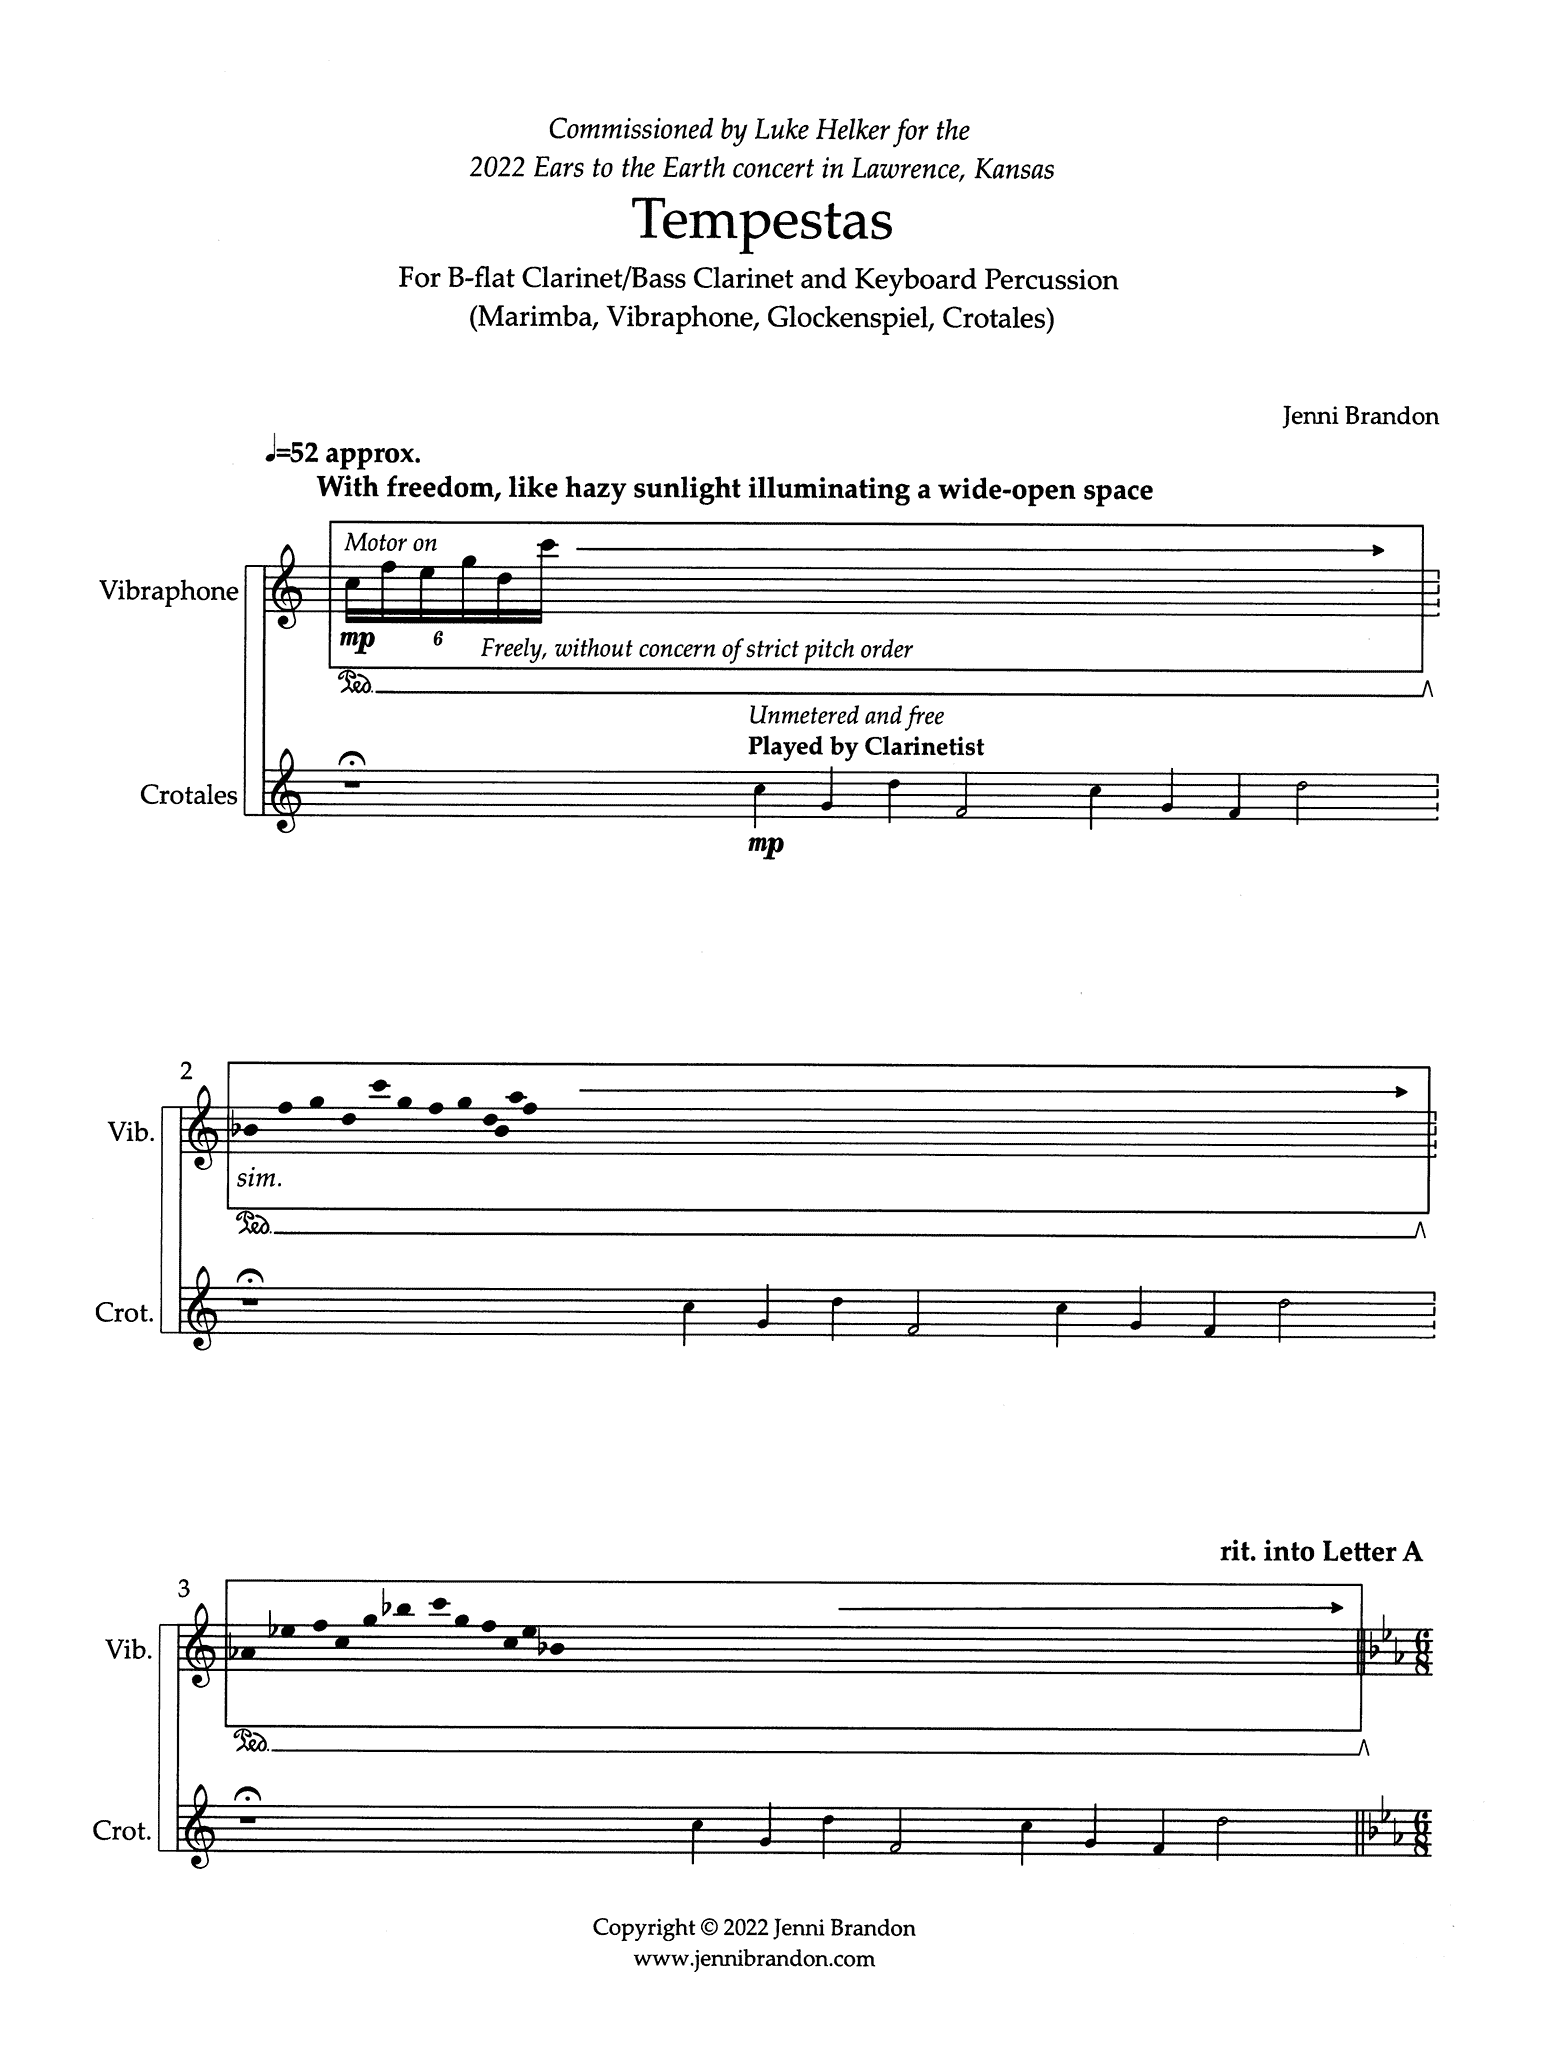 Brandon Tempestas clarinet and percussion score page 1